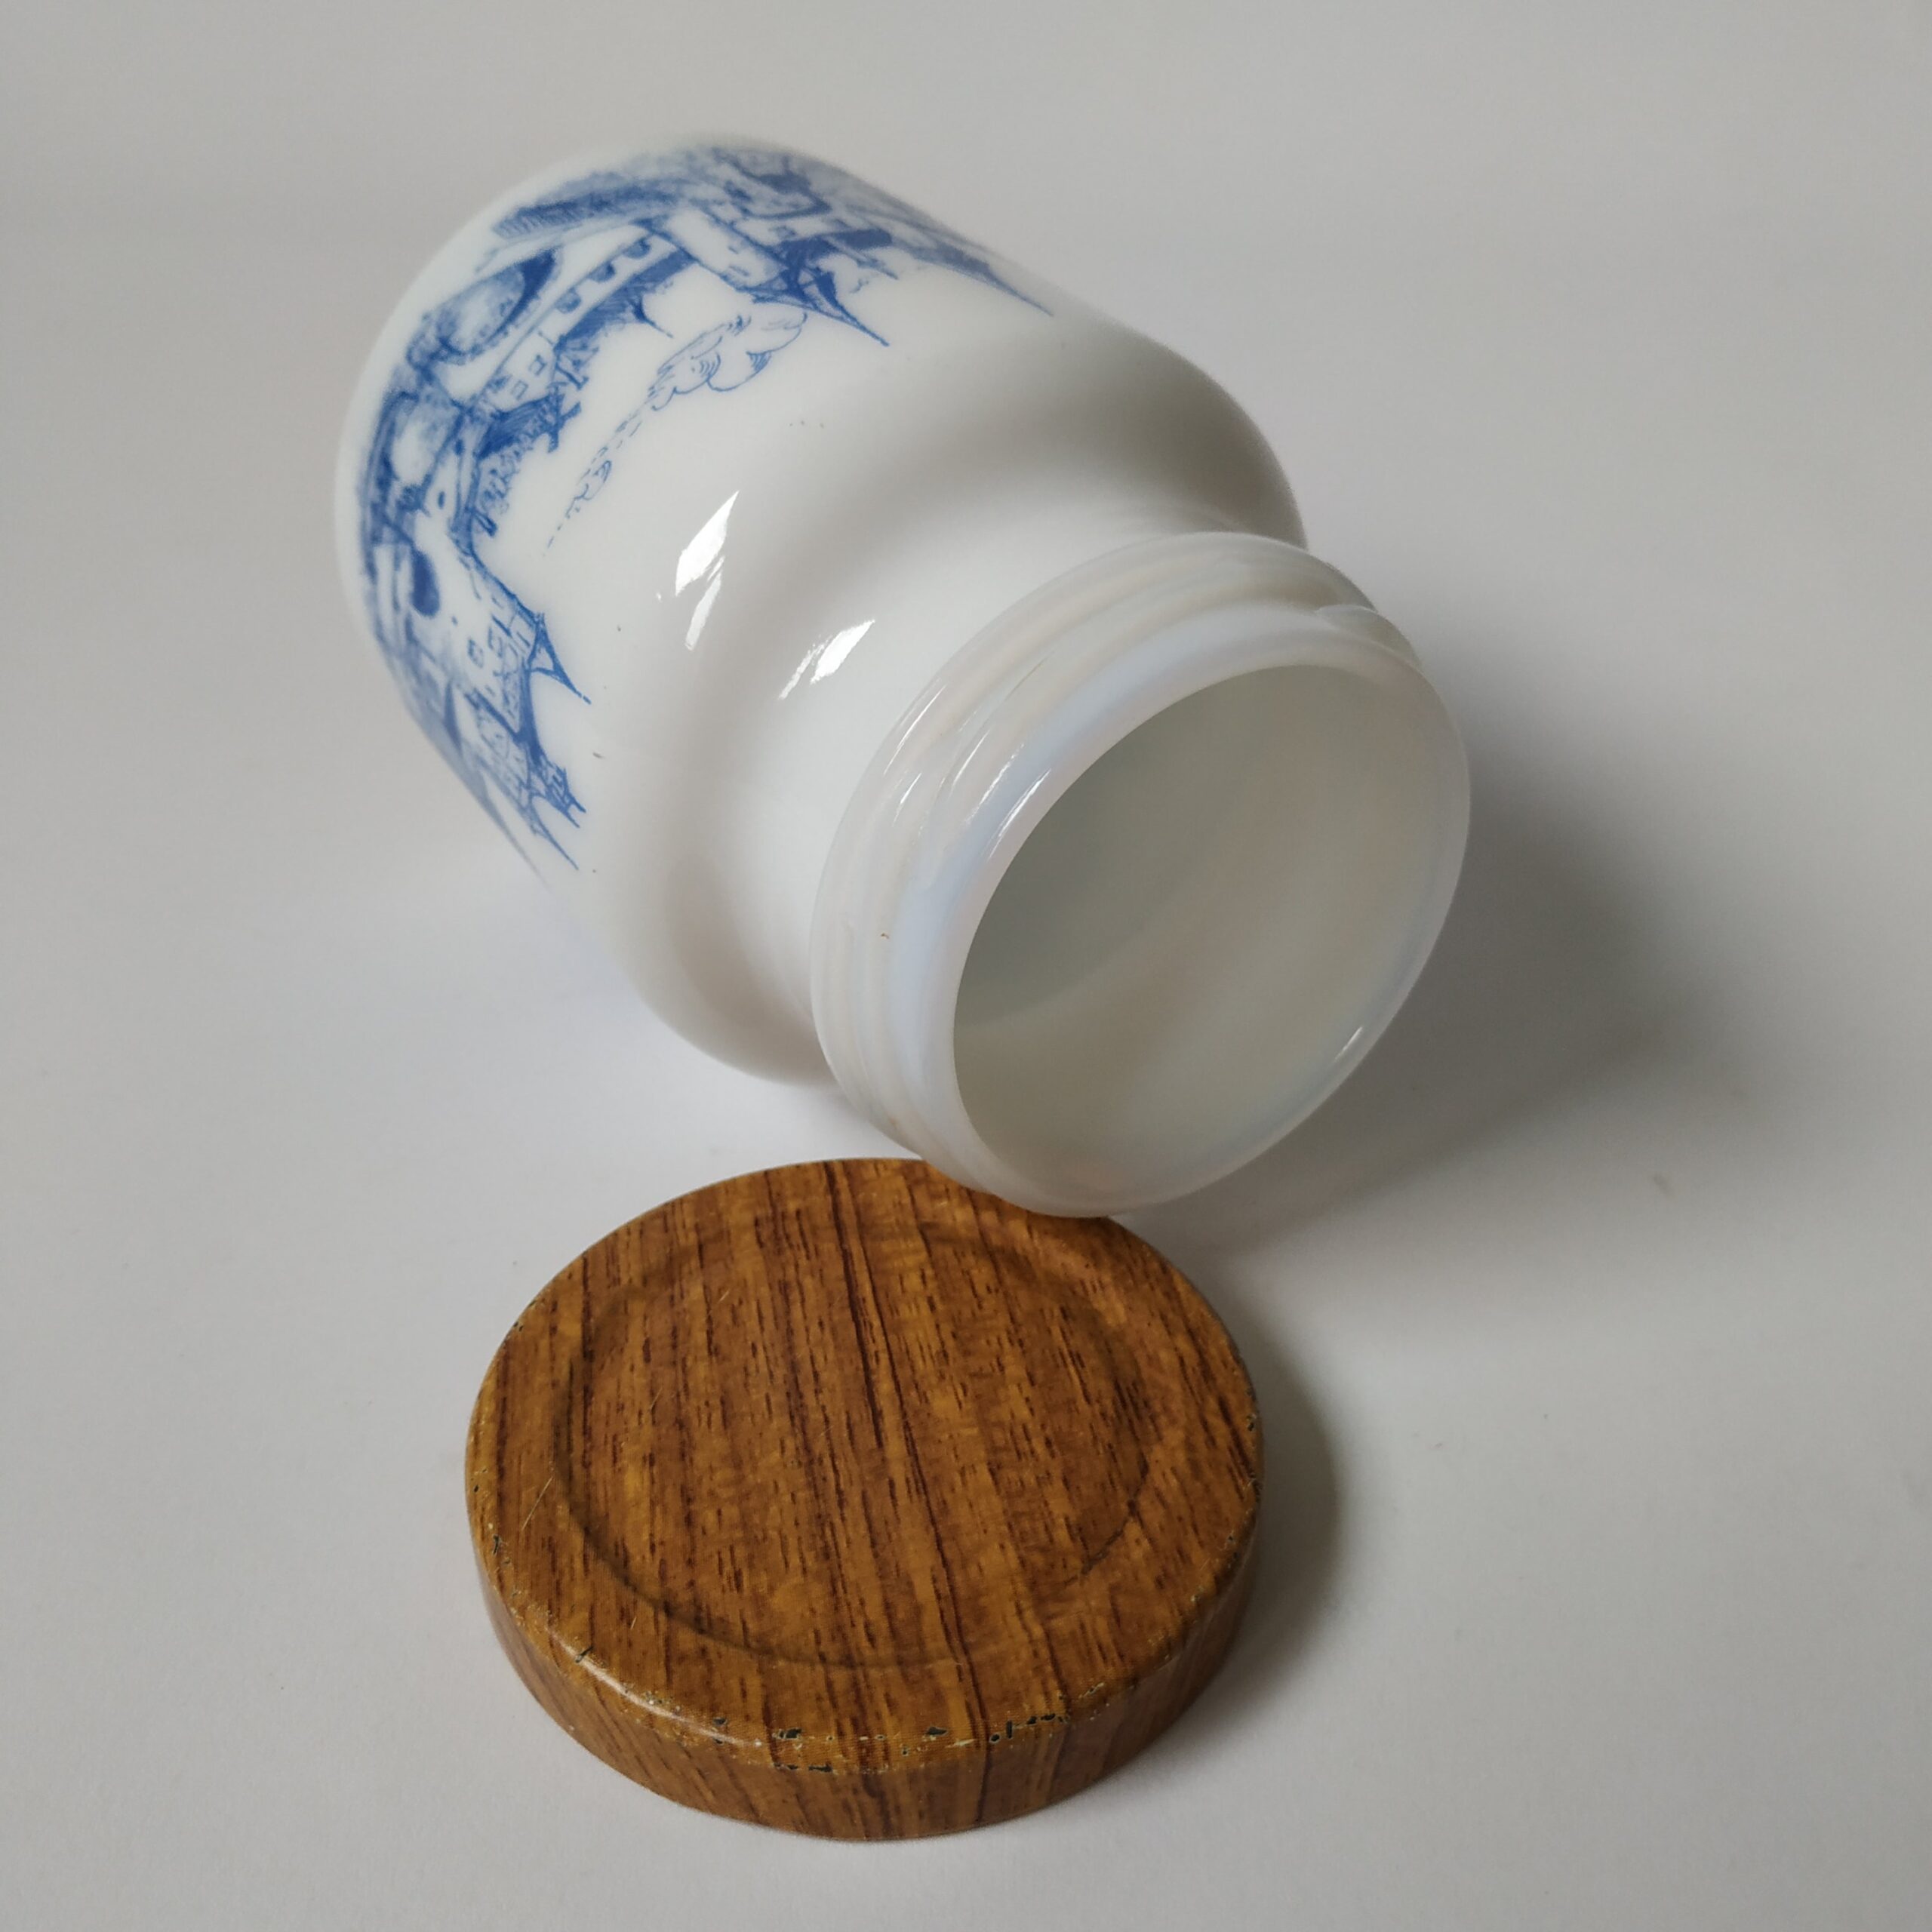 Mosterdpot – kruidenpot van melkglas – goed sluitbare deksel – hoogte 10 cm – diameter deksel 6 cm (5)